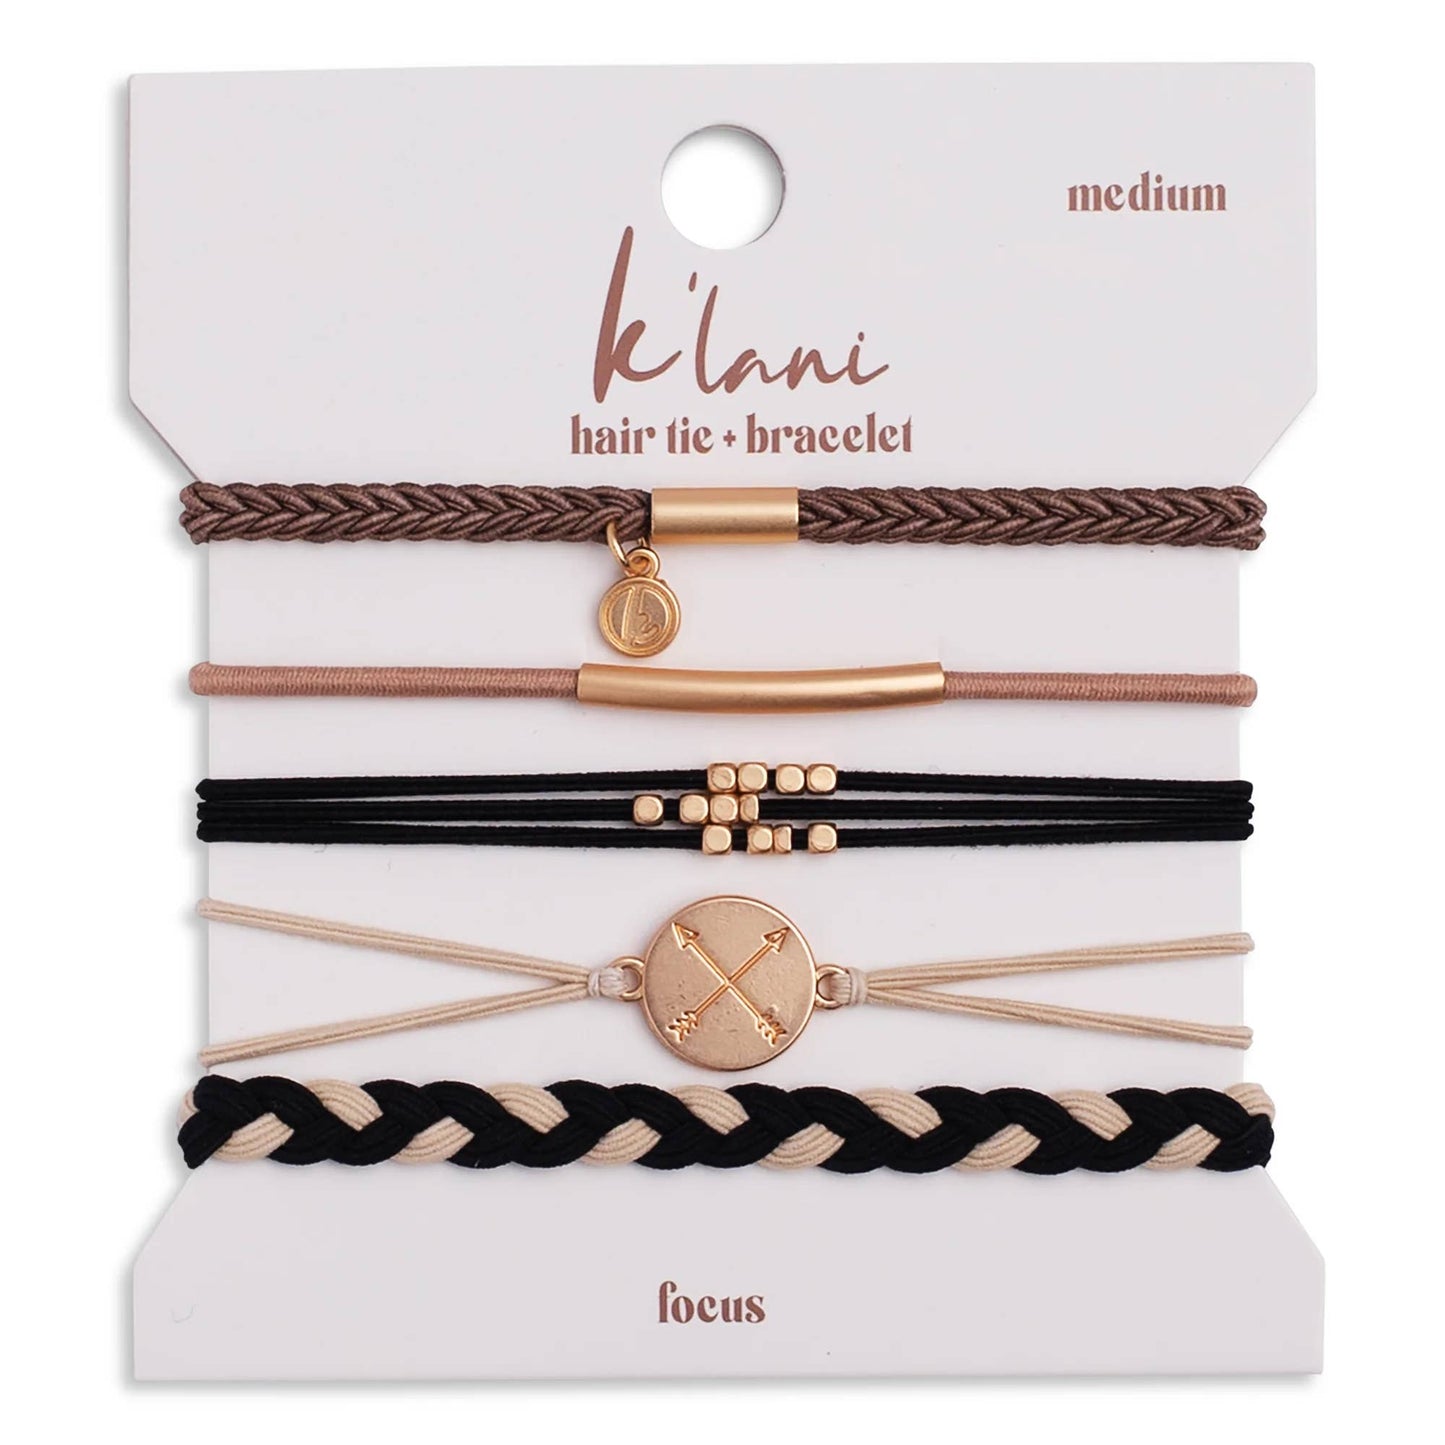 K'Lani Hair Tie Bracelets - Focus